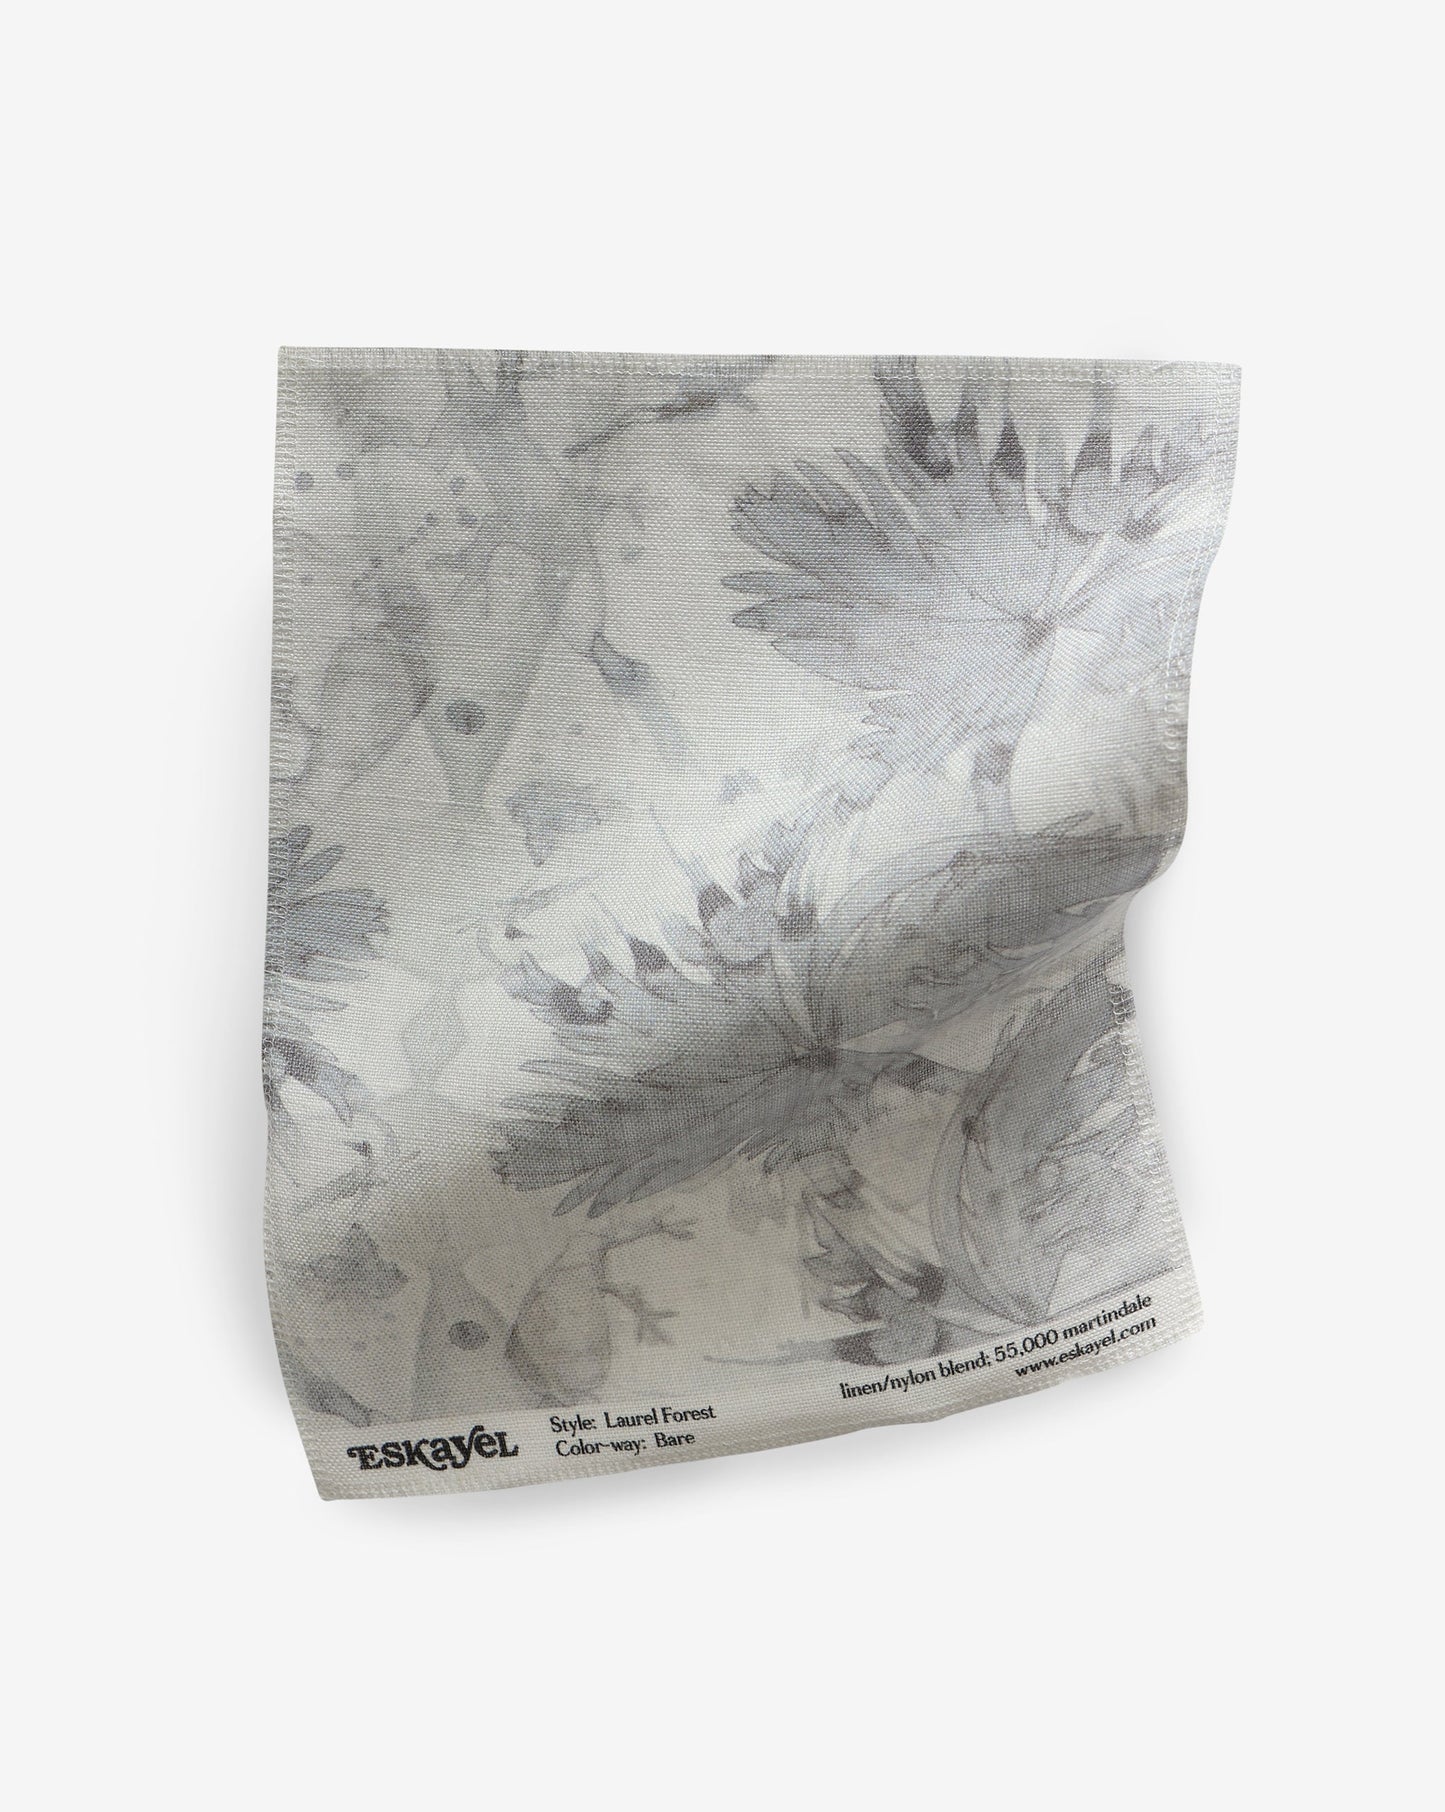 Laurel Forest Fabric Sample||Bare